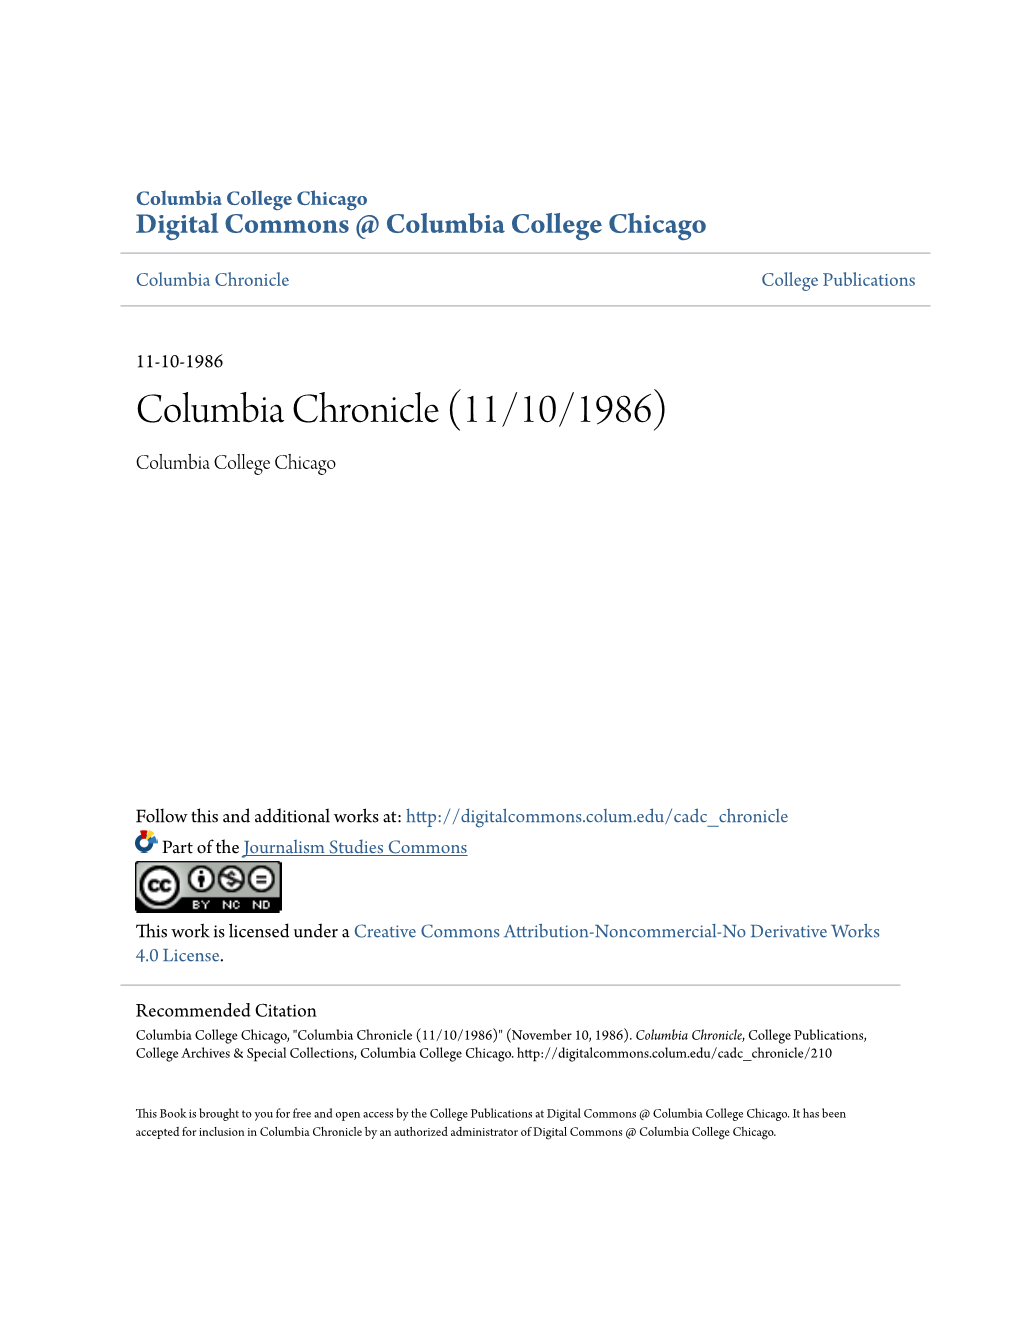 Columbia Chronicle (11/10/1986) Columbia College Chicago